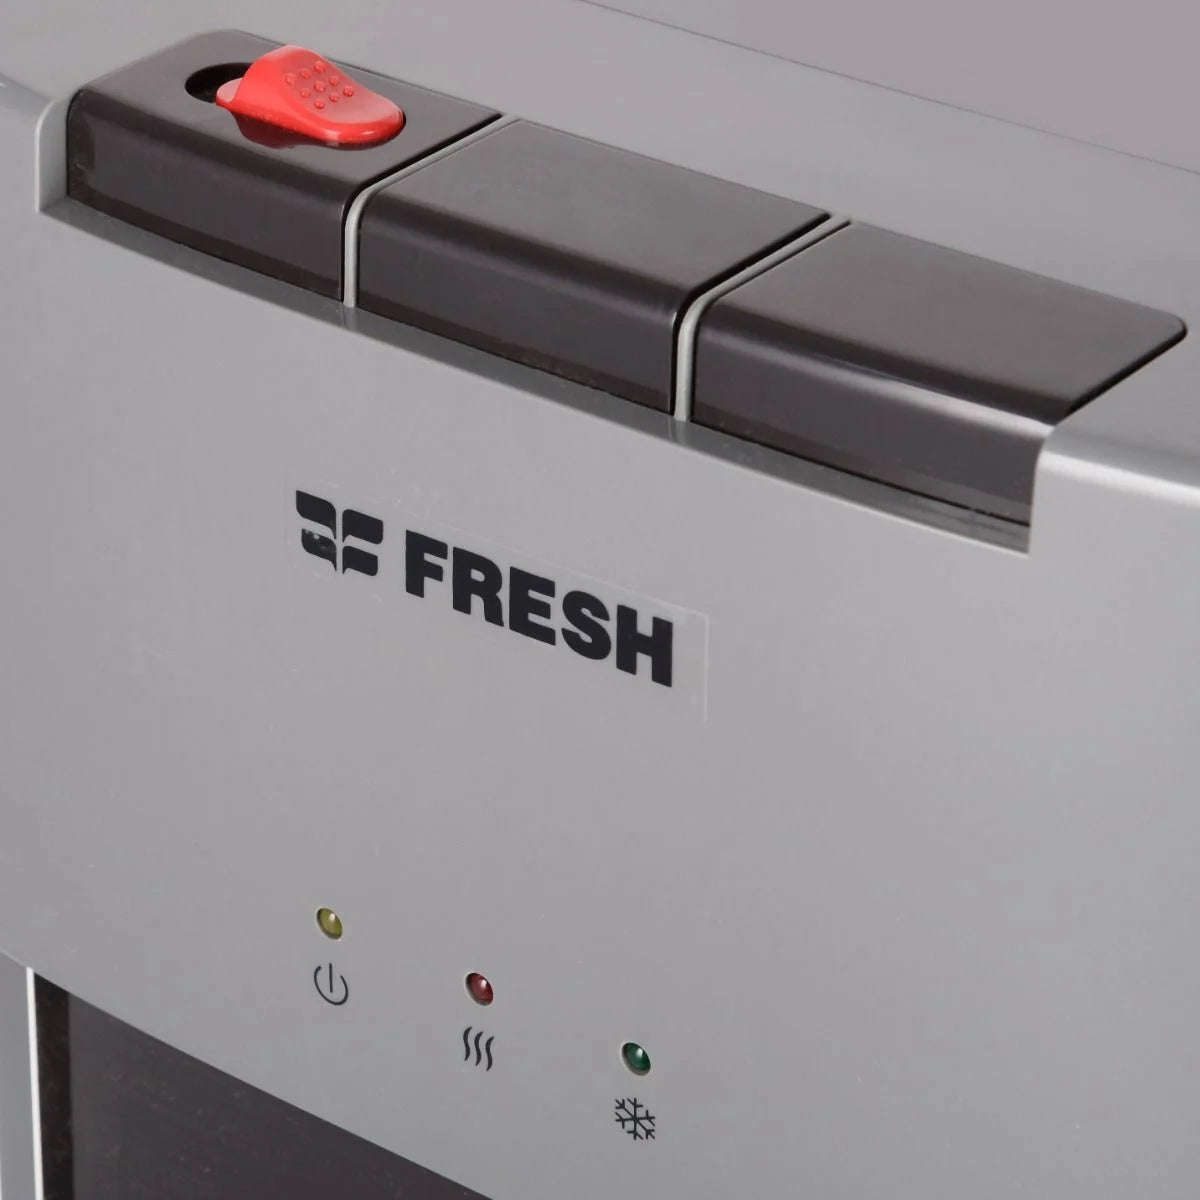 Fresh Water Dispenser 3 Taps Hot, Cold, And Normal, مبرد مياه فريش 3 حنفية بارد ساخن معتدل